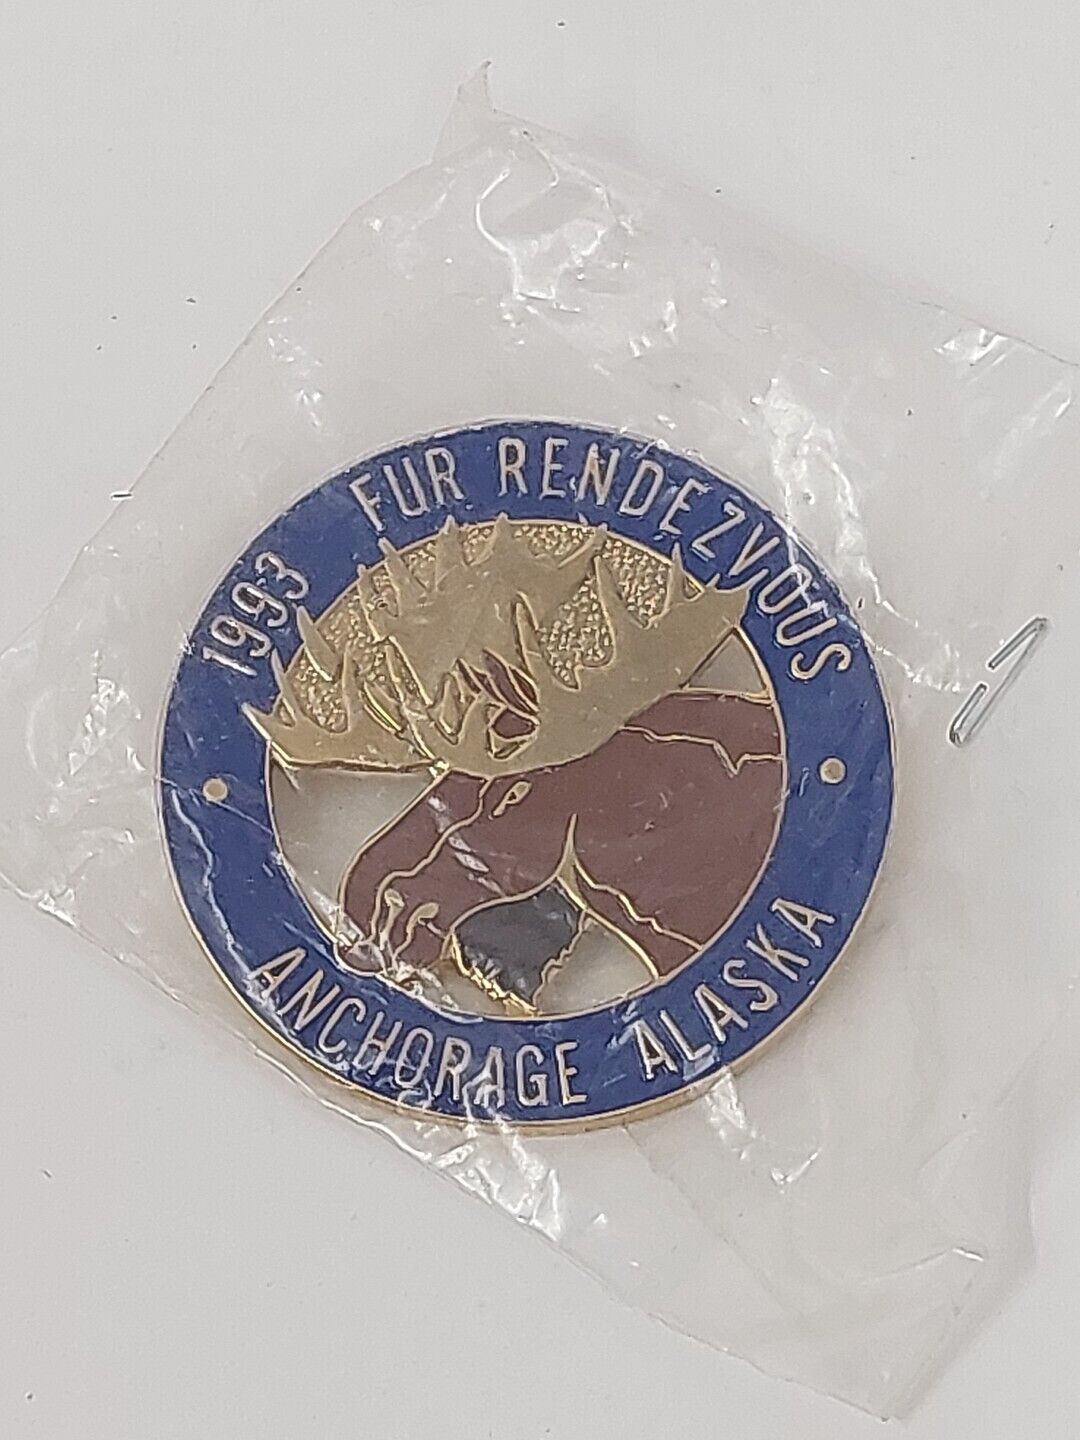 1993 Anchorage Alaska Fur Rondy Rendezvous Lapel Pin Moose